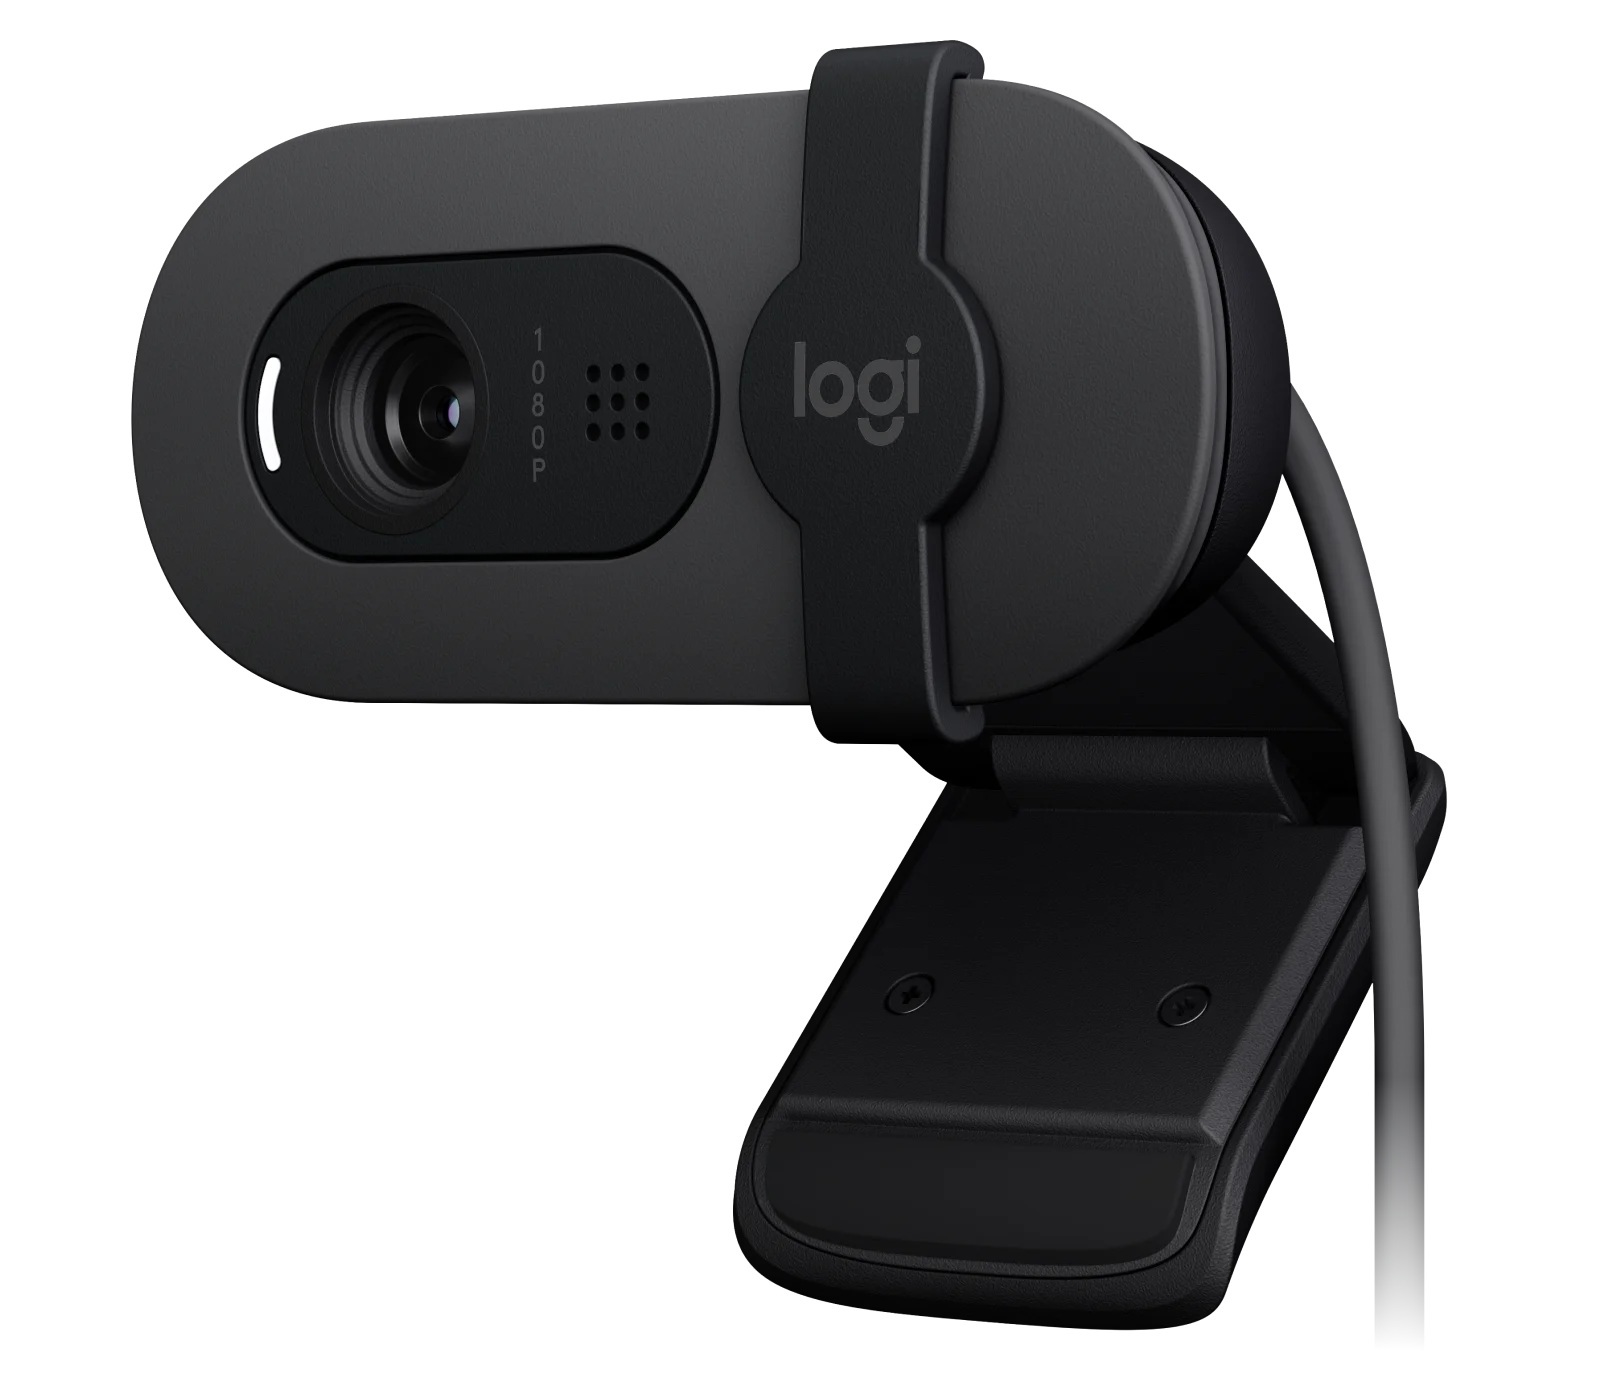 Логитеч брио. Веб-камера Logitech Brio. Веб-камера Logitech Brio 300 (960-001436). Logitech Brio 300.